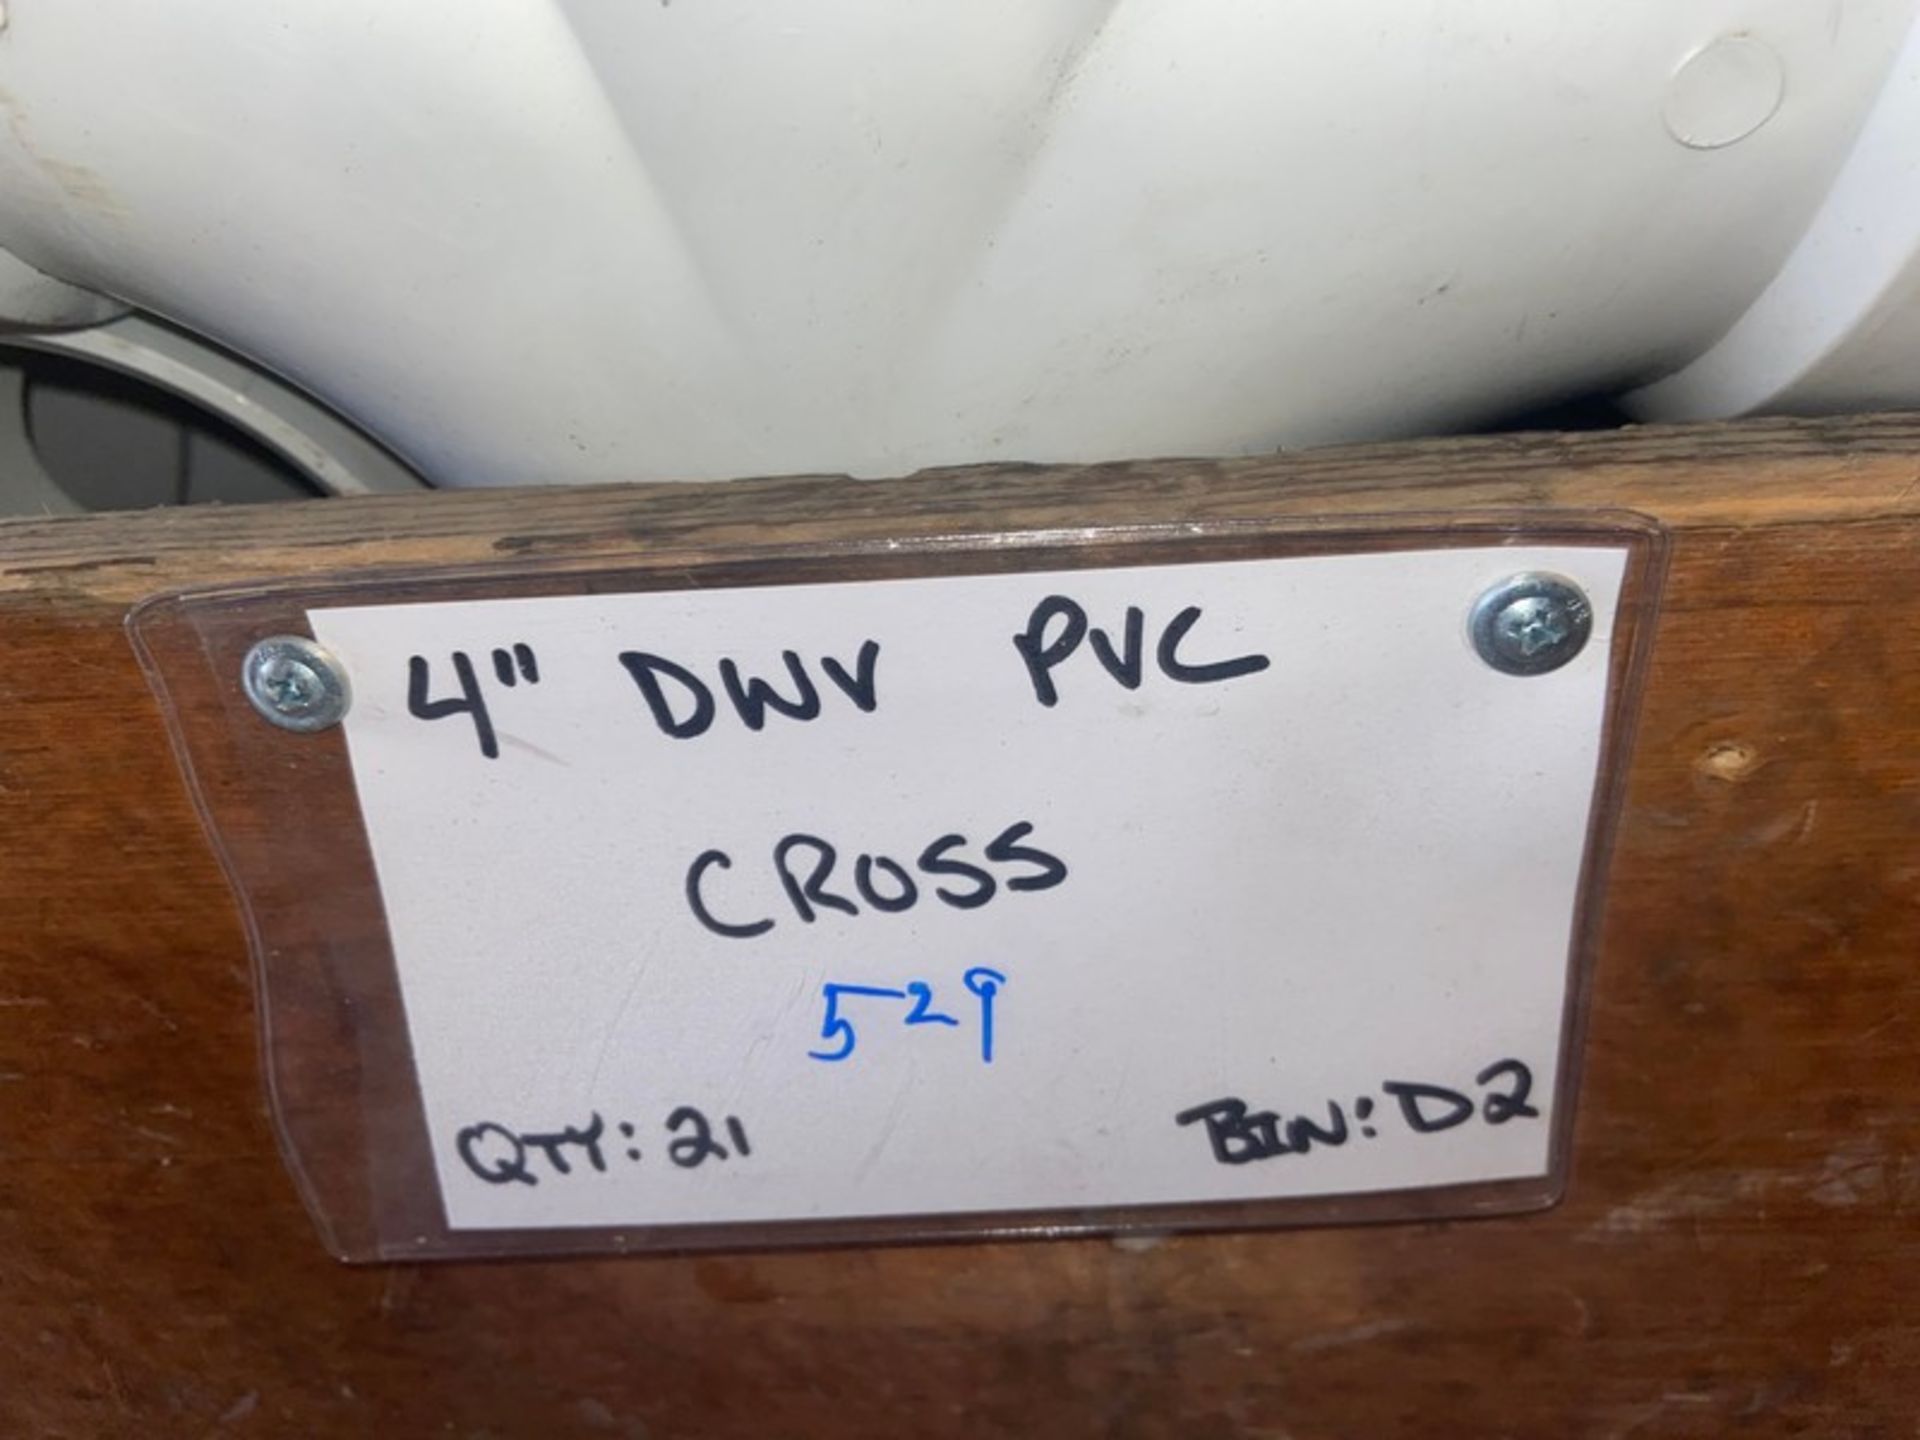 (21) 4” DWV OCC CROSS (Bin:D2) (LOCATED IN MONROEVILLE, PA) - Image 2 of 4